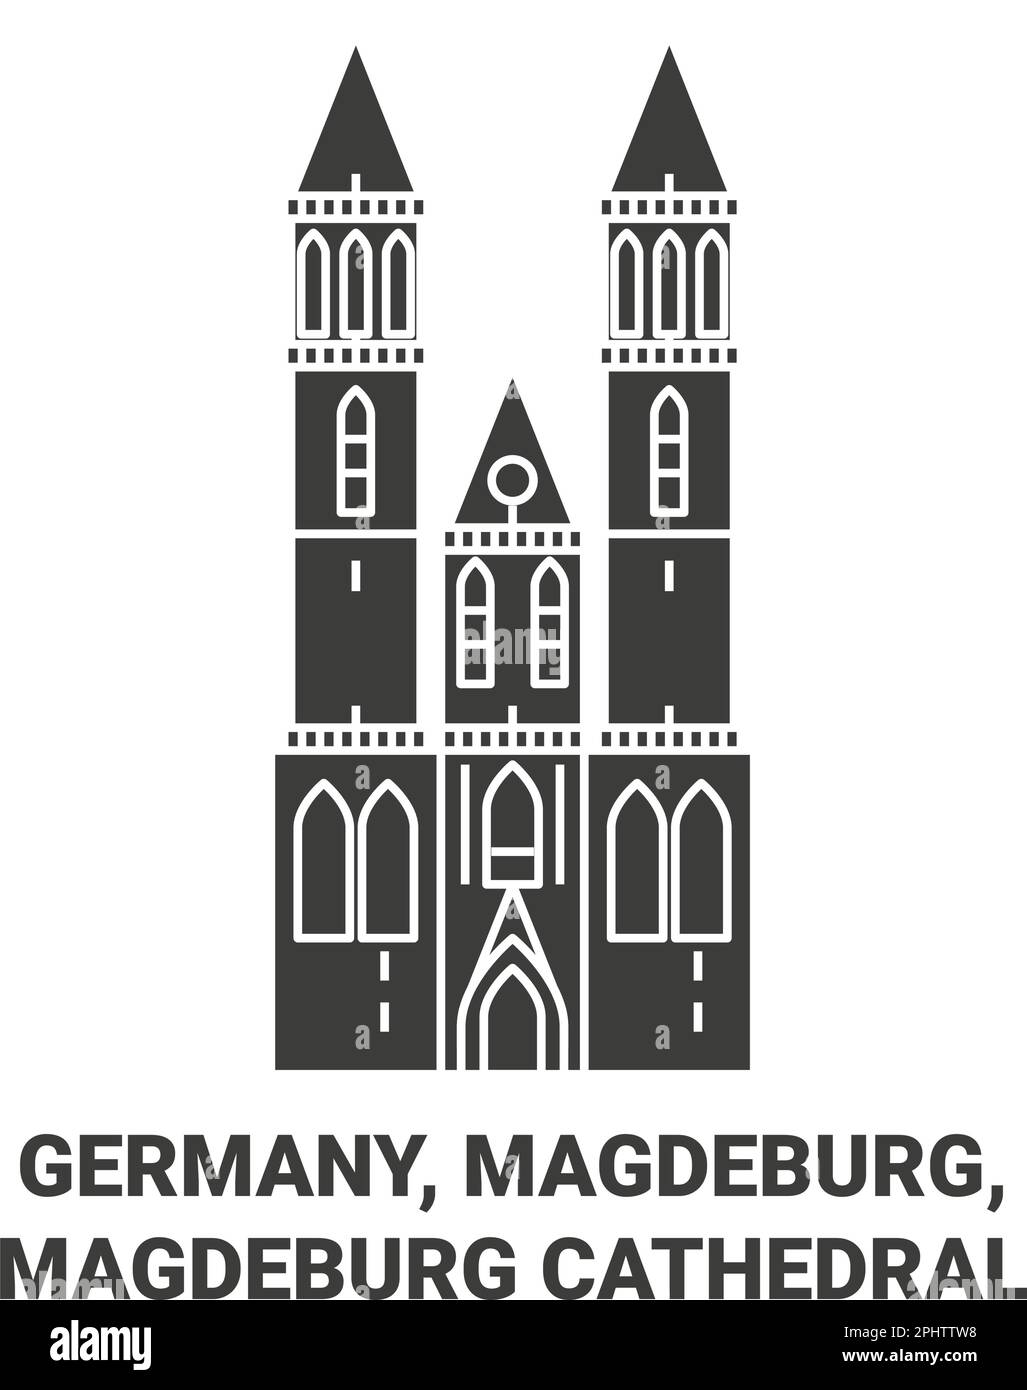 Allemagne, Magdeburg, Cathédrale de Magdeburg voyage illustration vectorielle Illustration de Vecteur